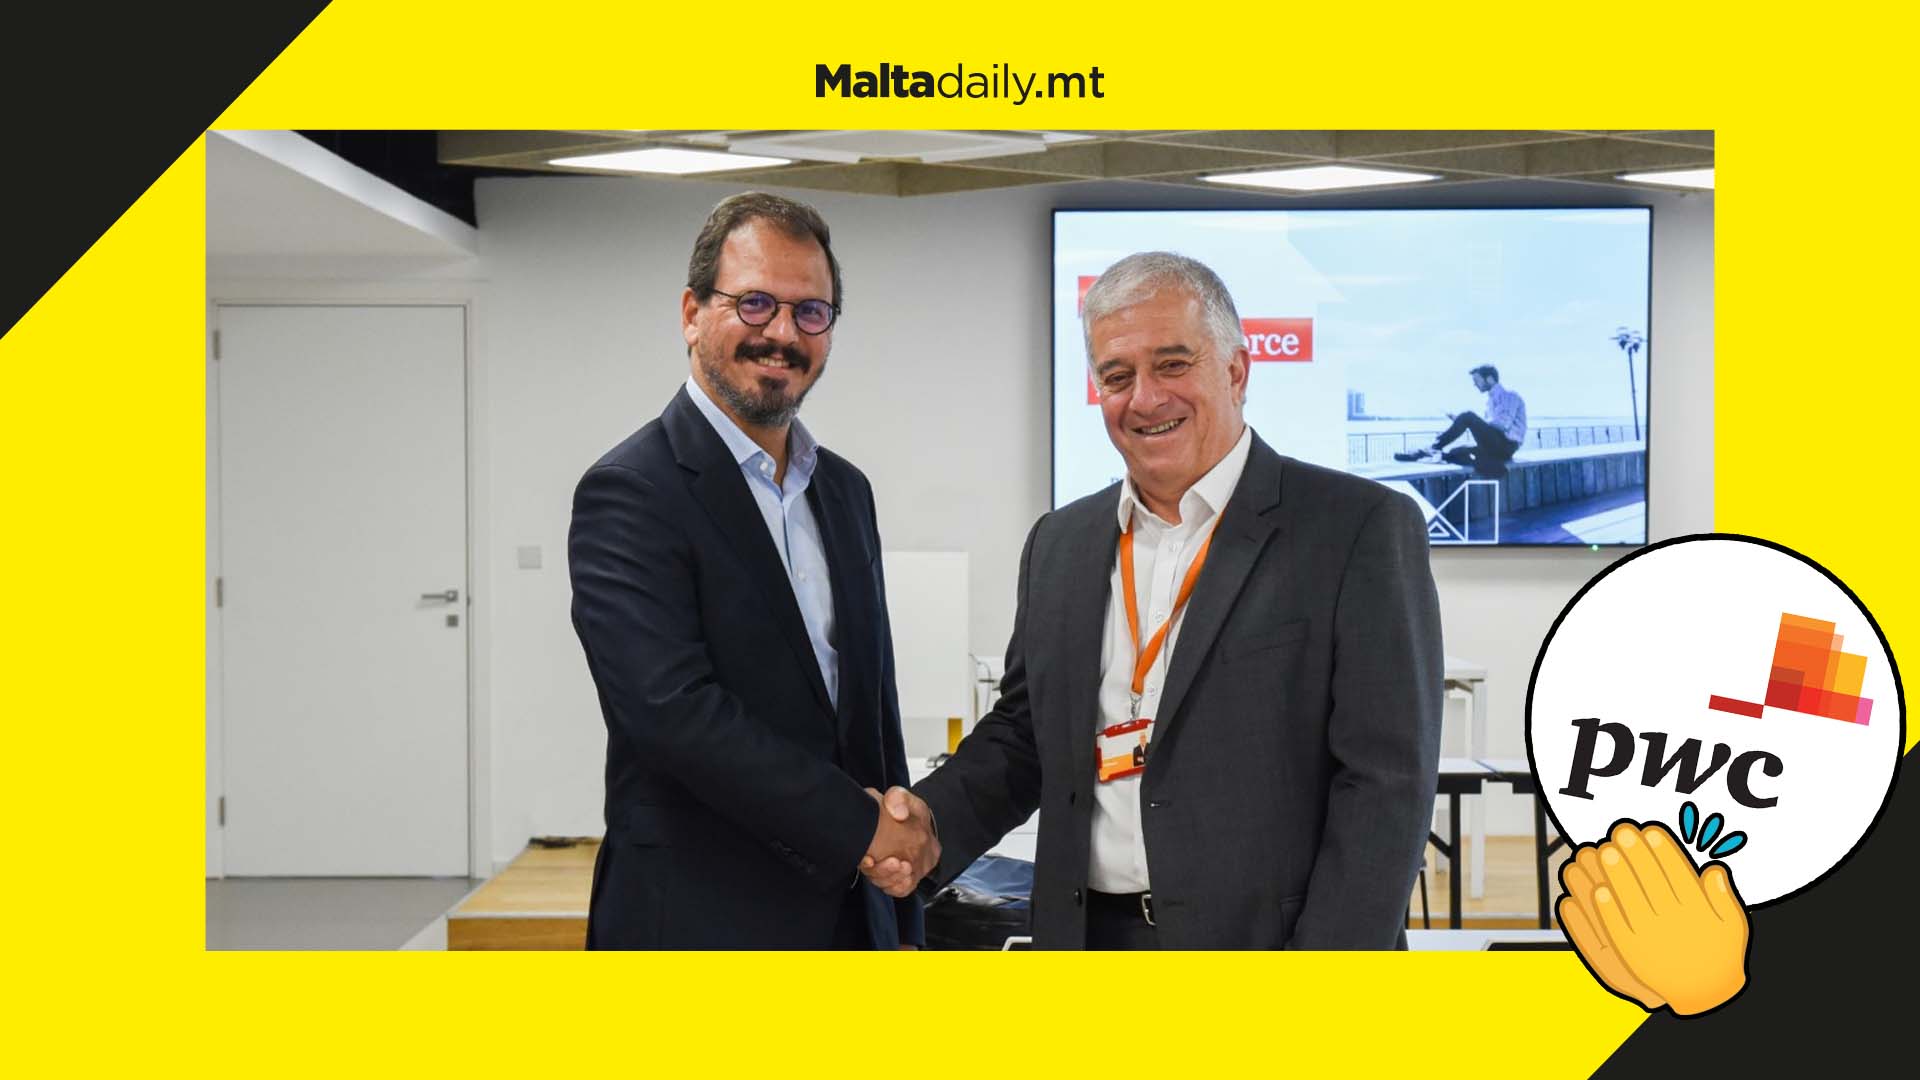 PwC Malta formally launches its Salesforce practice in Malta